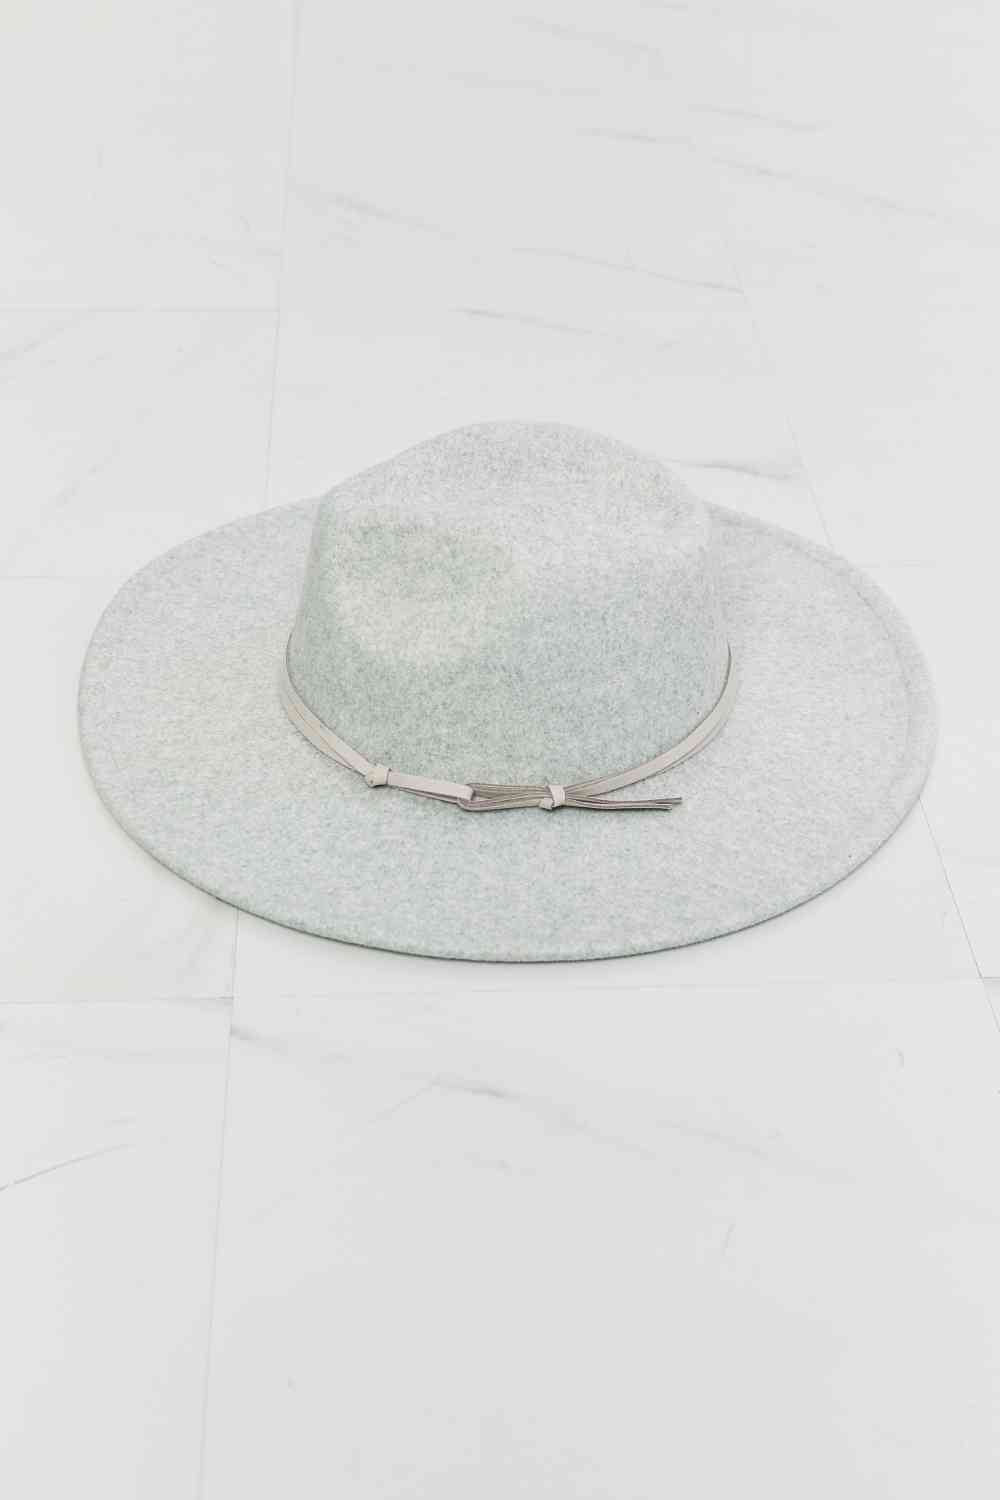 Blithe's Belted Fedora Hat - Light Gray